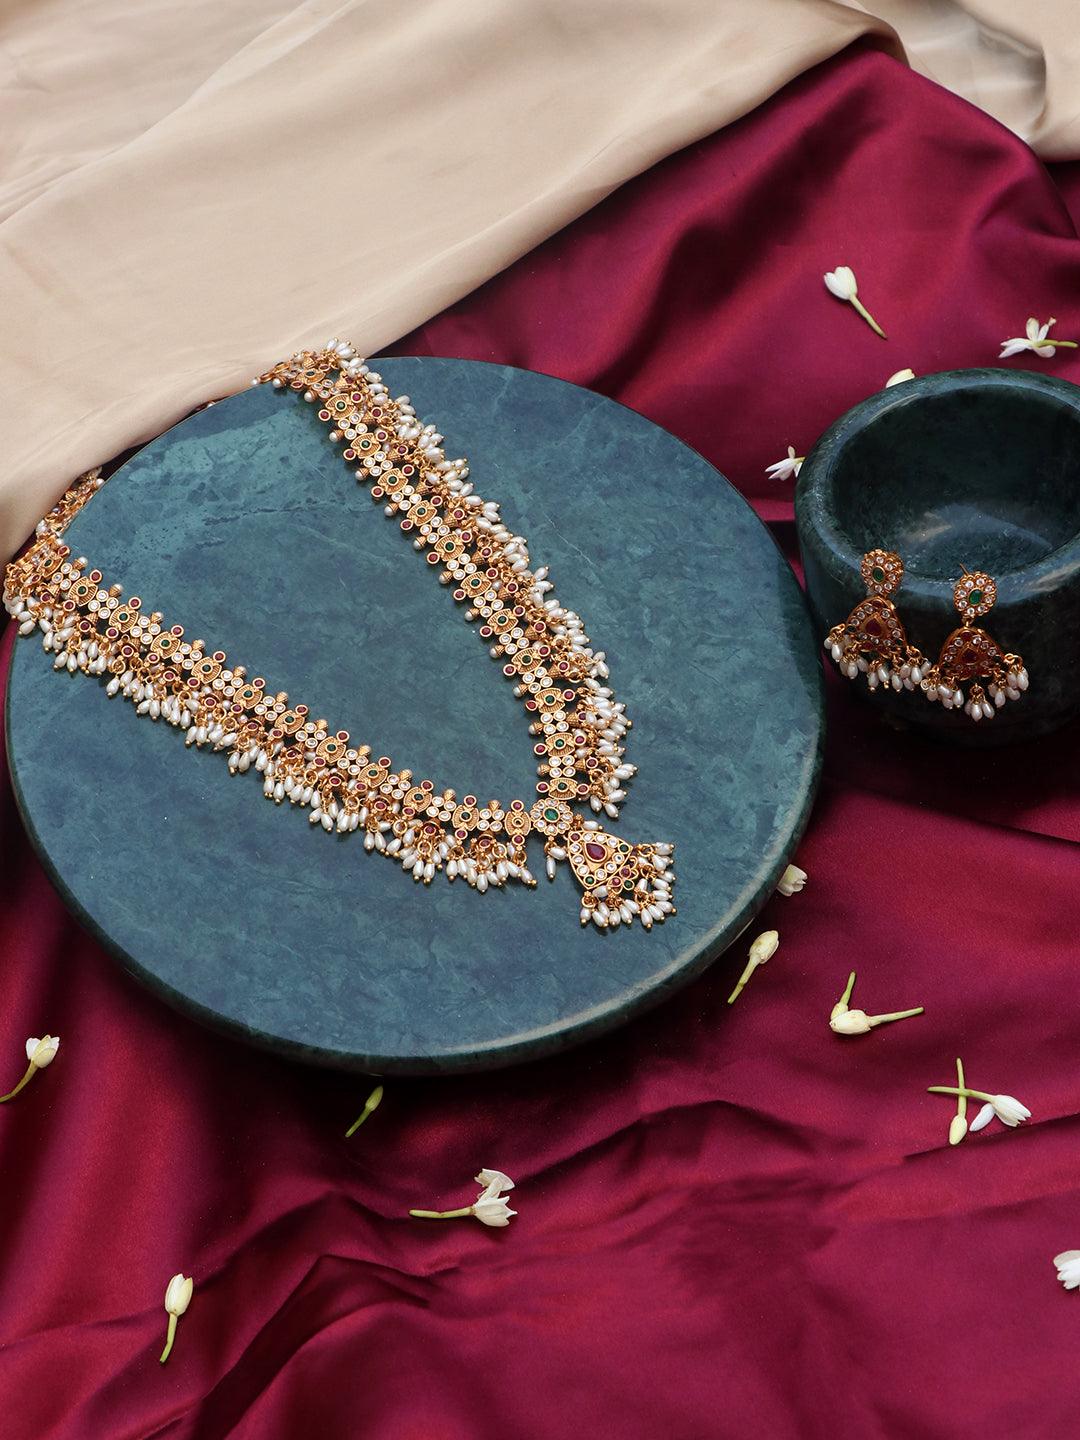 Ishhaara Kempu pearl Long Necklace Temple Jewellery Set